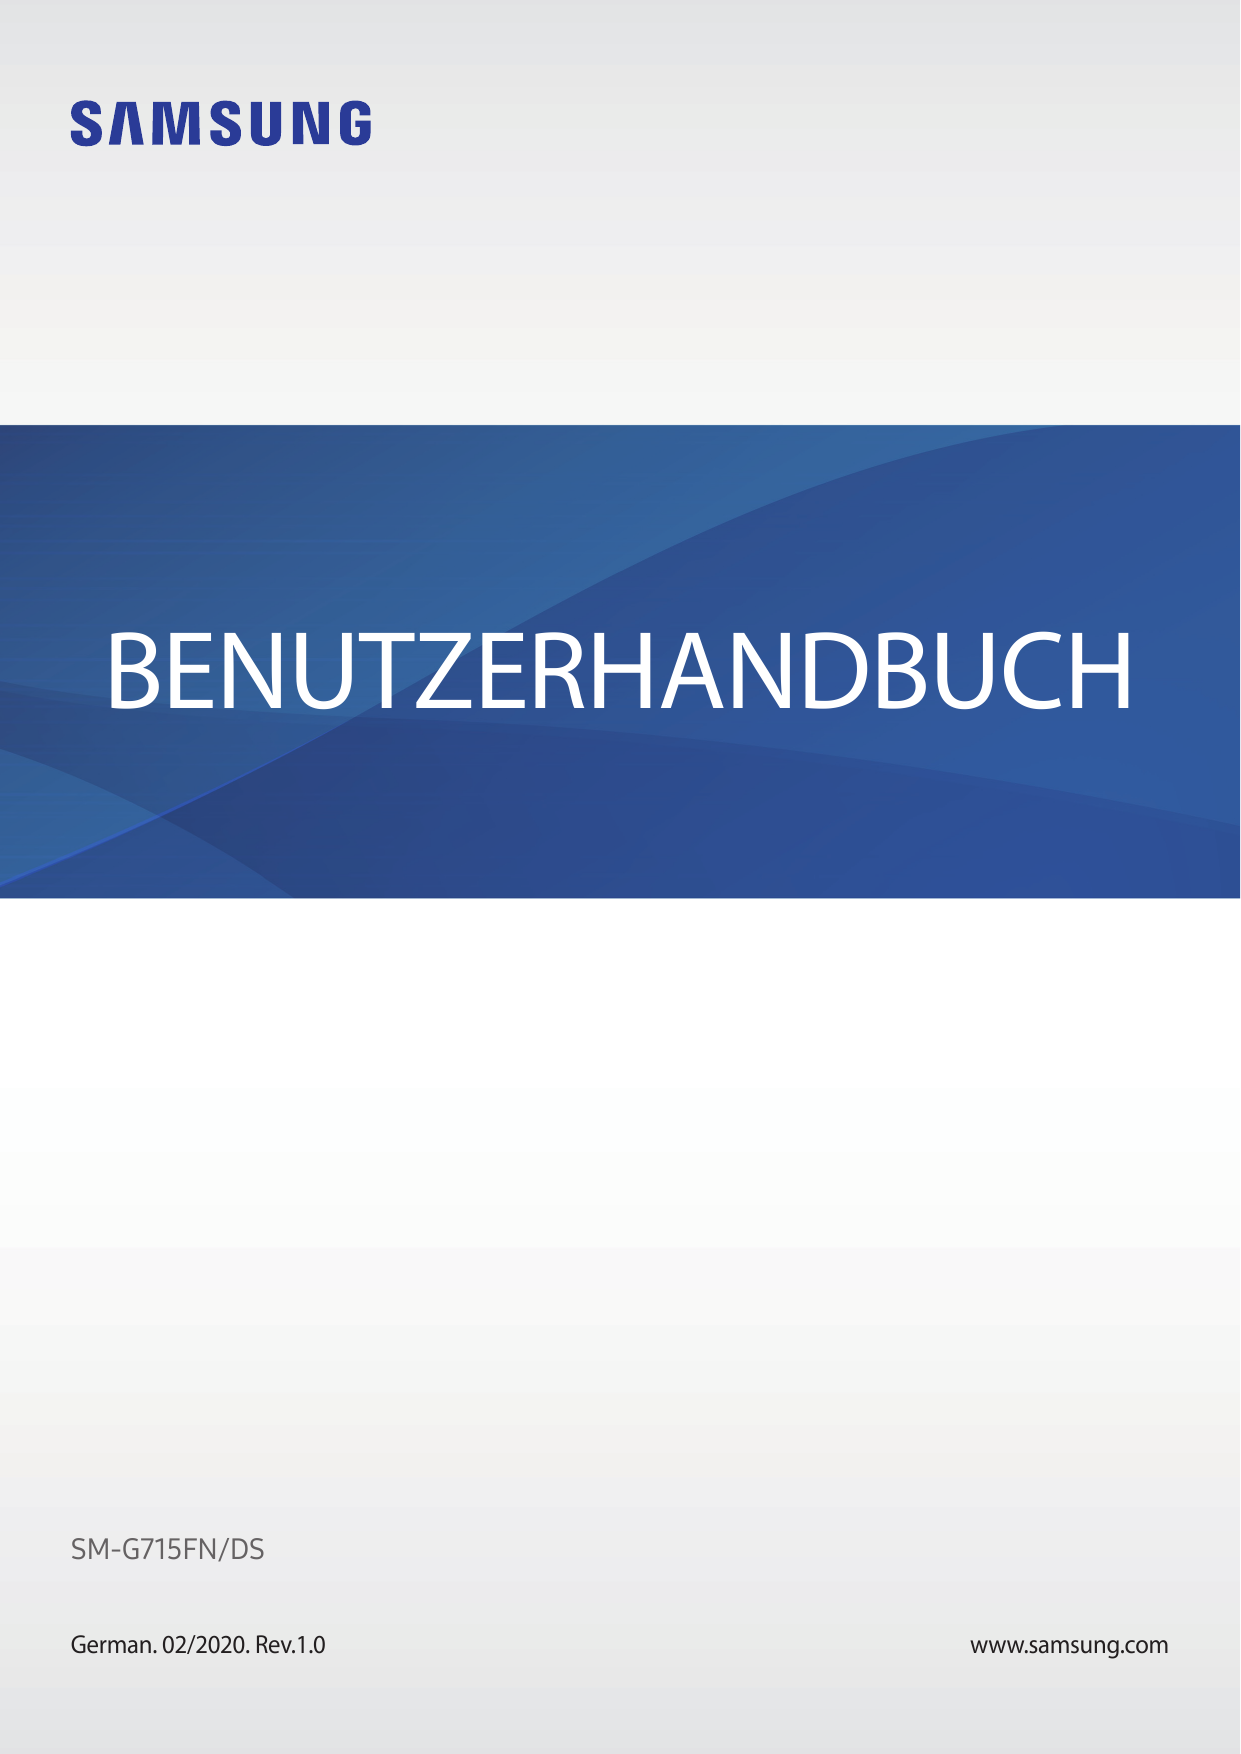 BENUTZERHANDBUCHSM-G715FN/DSGerman. 02/2020. Rev.1.0www.samsung.com